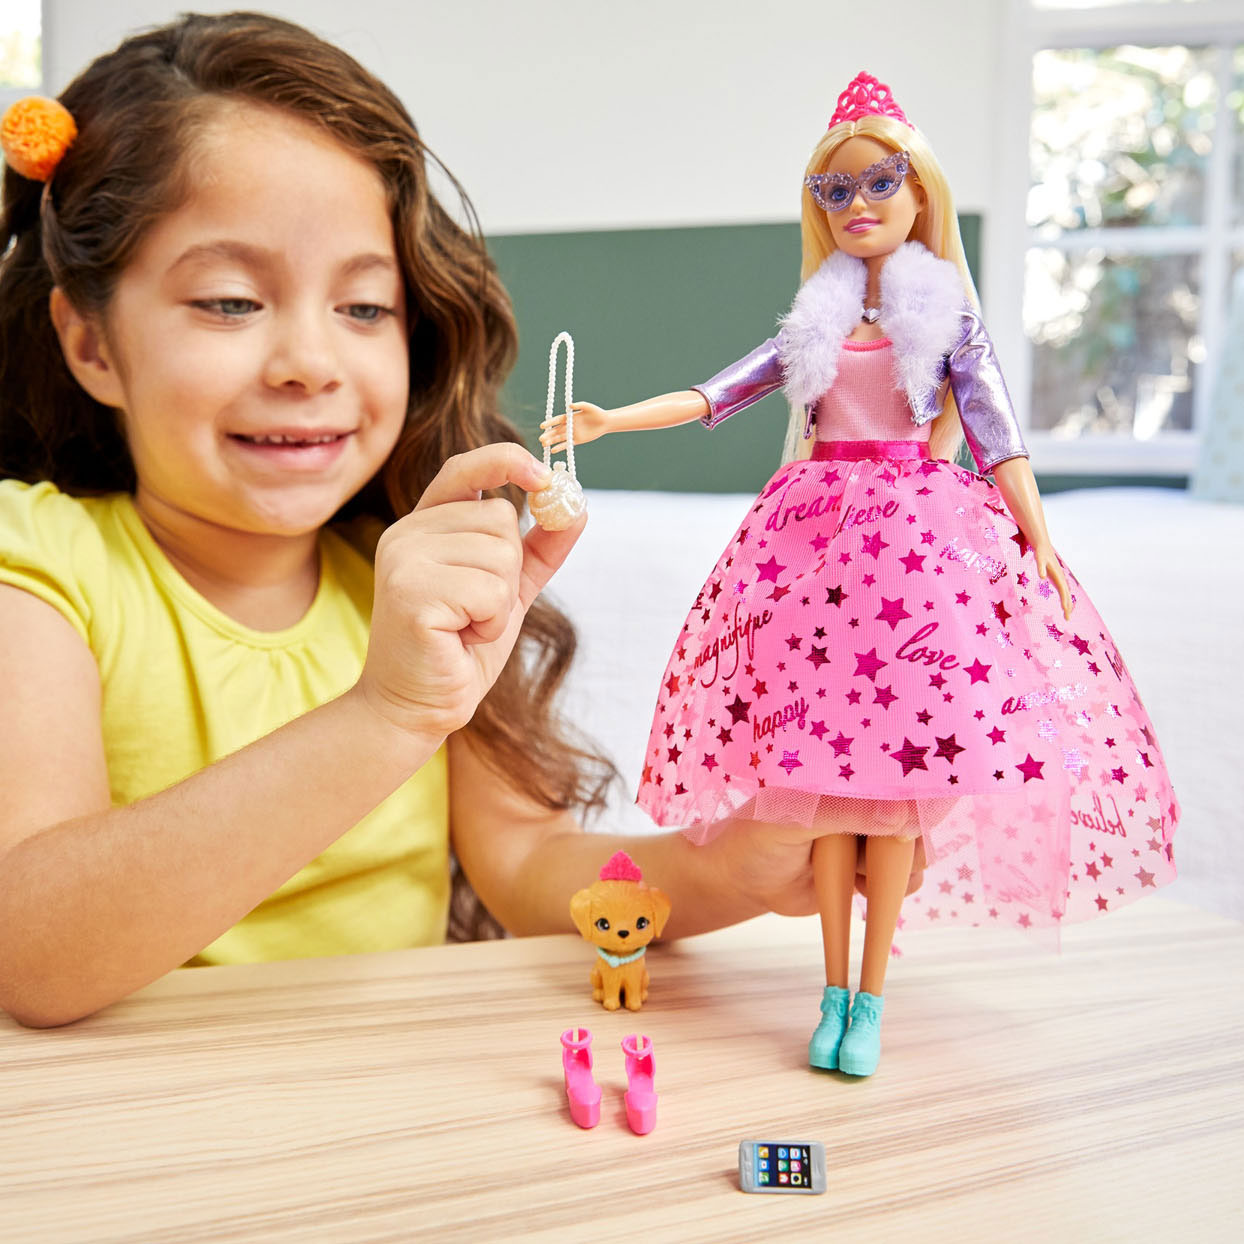 Barbie Princess Adventure - Luxe Prinses